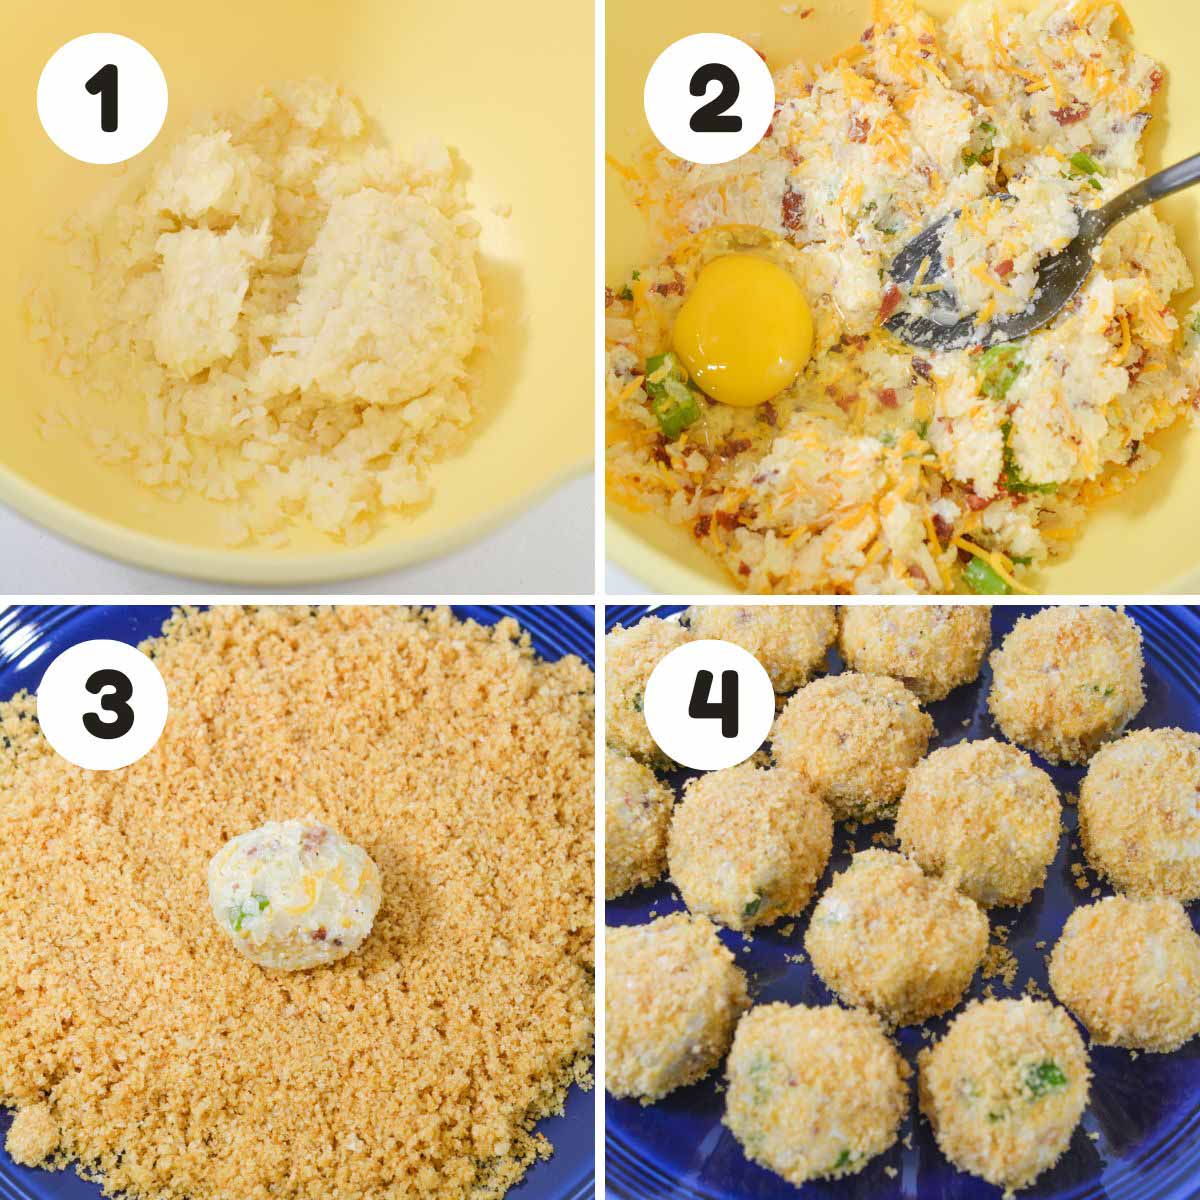 Steps to make the rice balls.